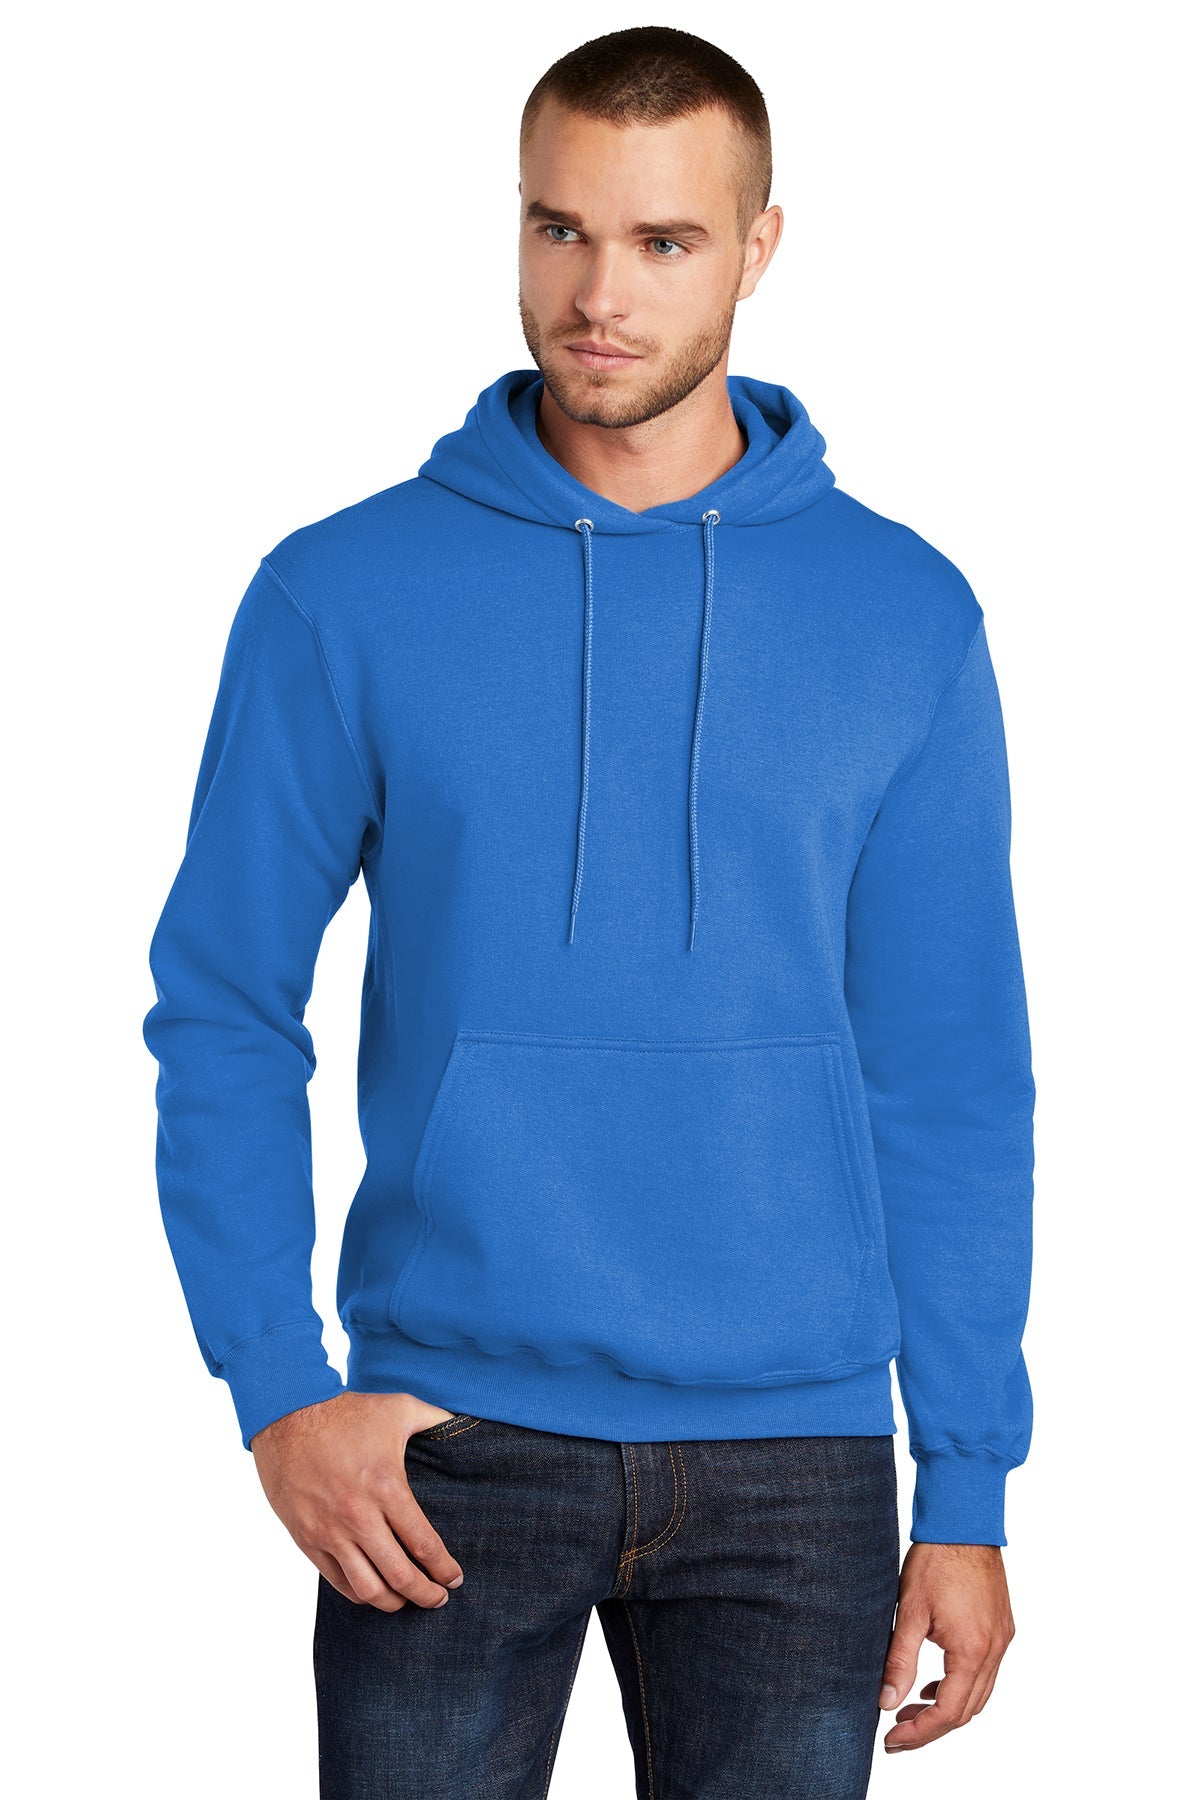 Port & Company Tall Core Fleece Pullover Hooded Sweatshirt PC78HT – BT  Imprintables Shirts